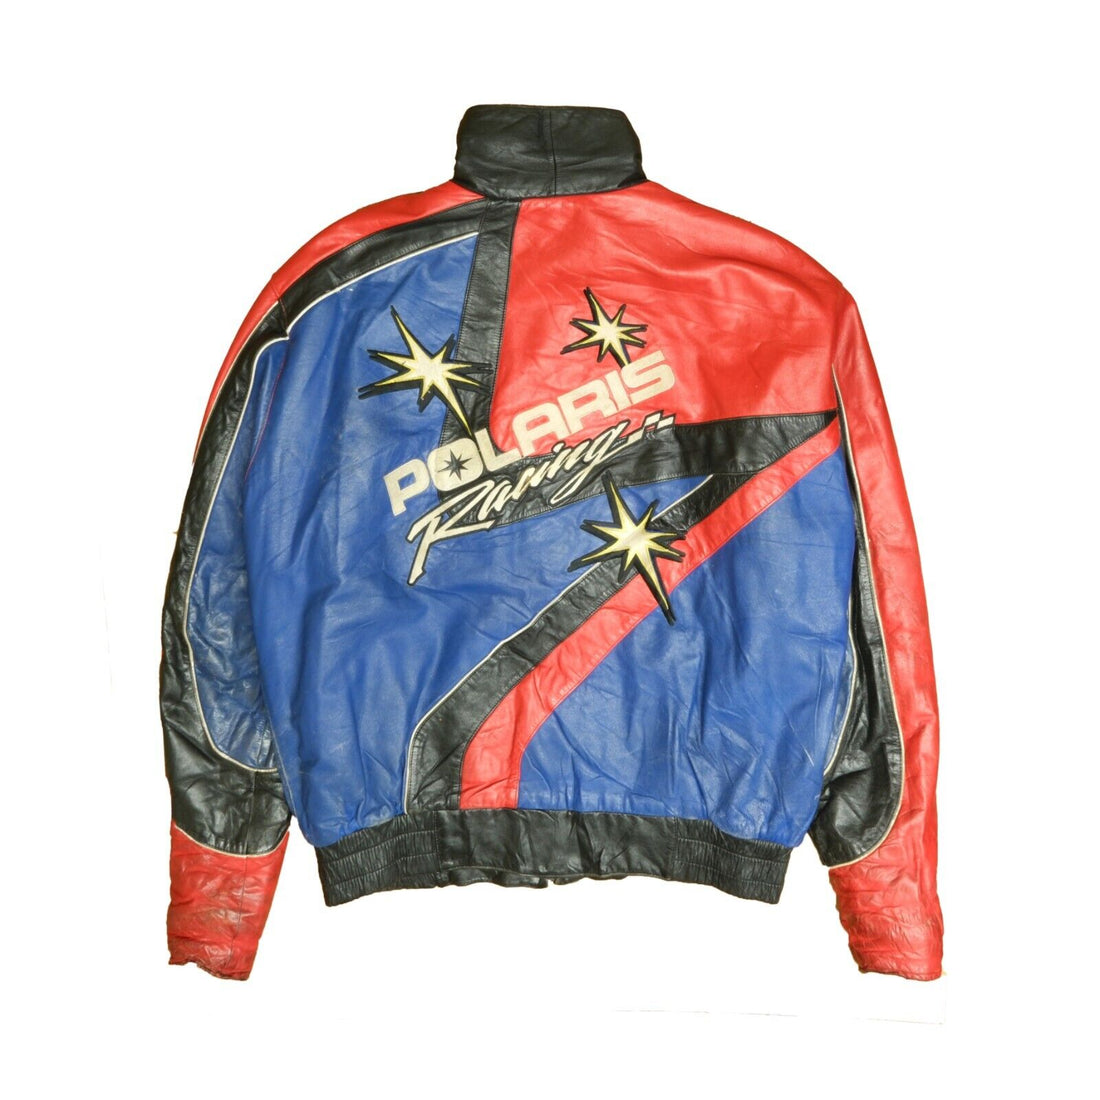 Vintage Polaris Racing Motorcycle Leather Jacket Size 2XL Snowmobile